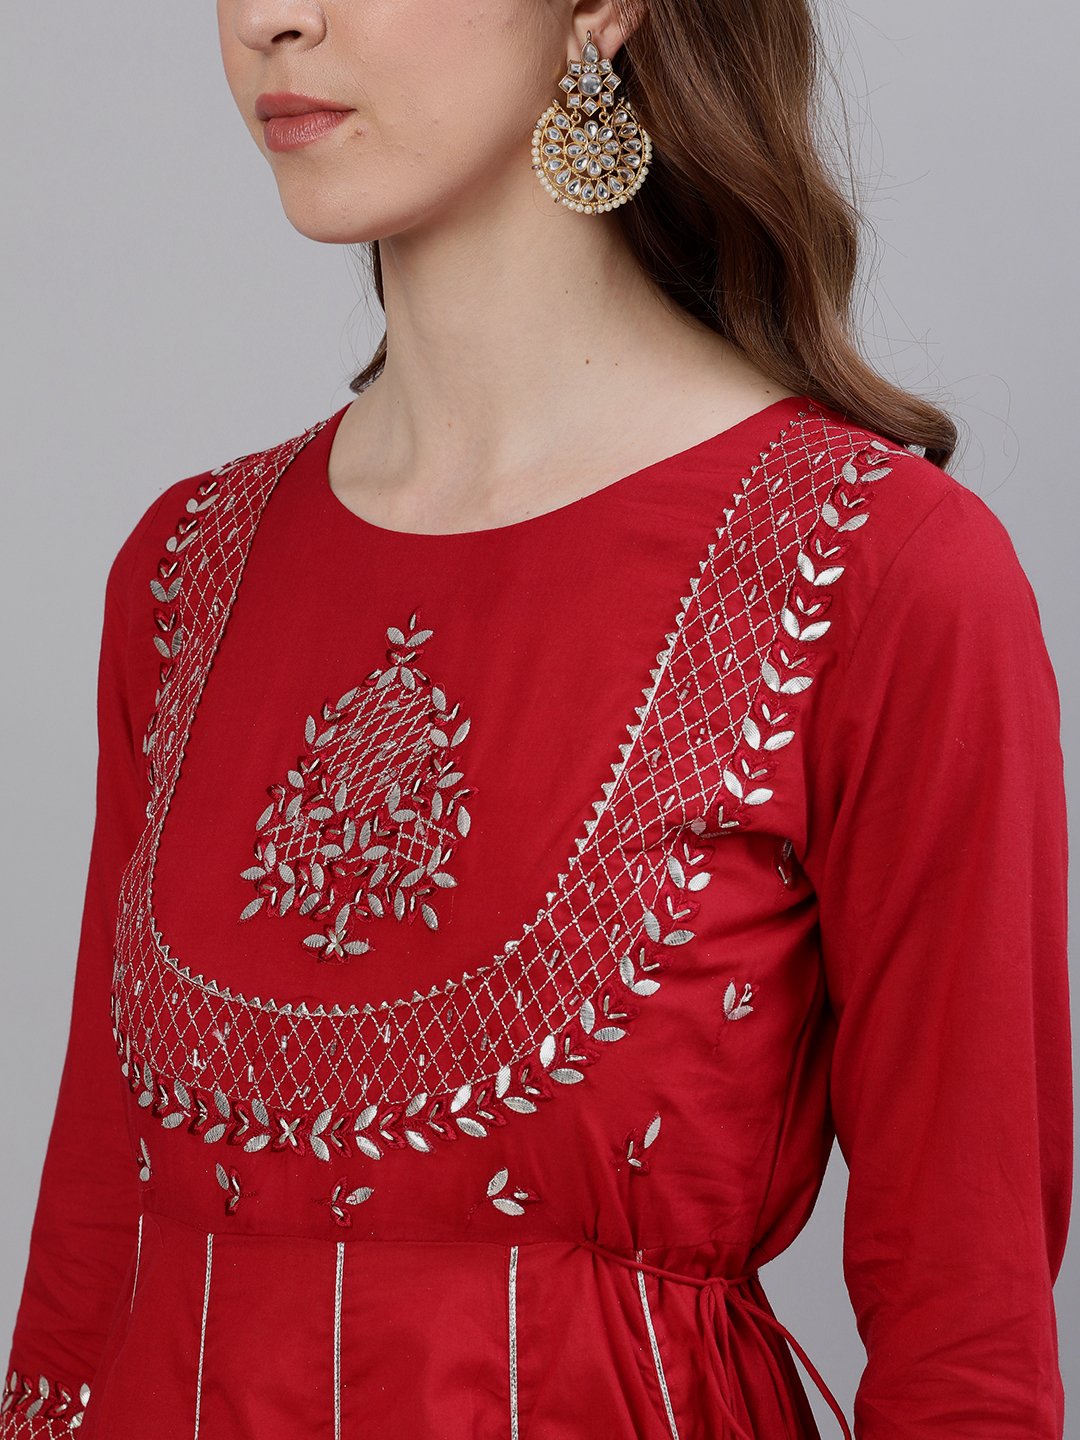 Ishin Women's Red Gota Patti Embellished Anarkali Kurta